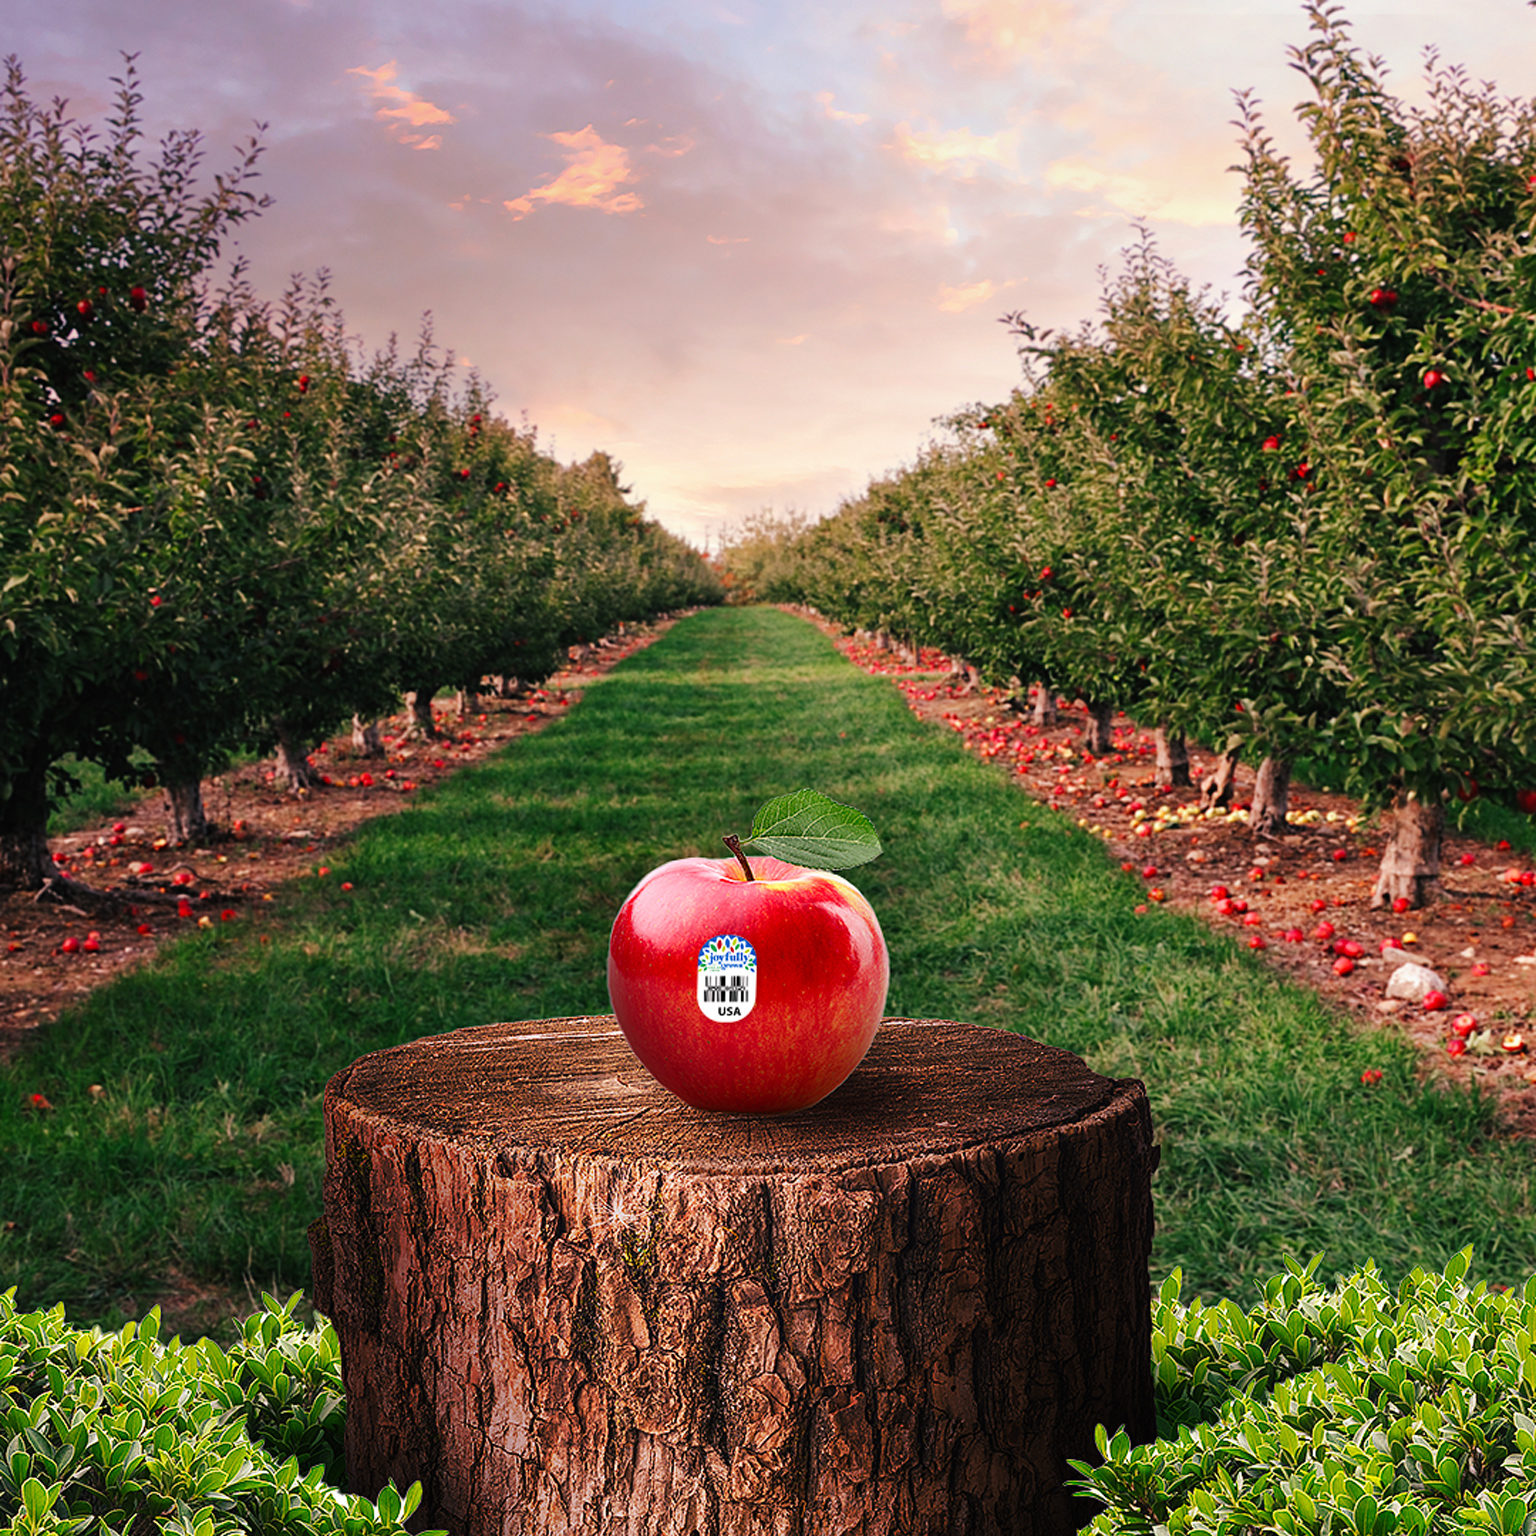 Joyfully Grown Honeycrisp Apple on a Wood Stump In-between Rows of Trees in an Orchard